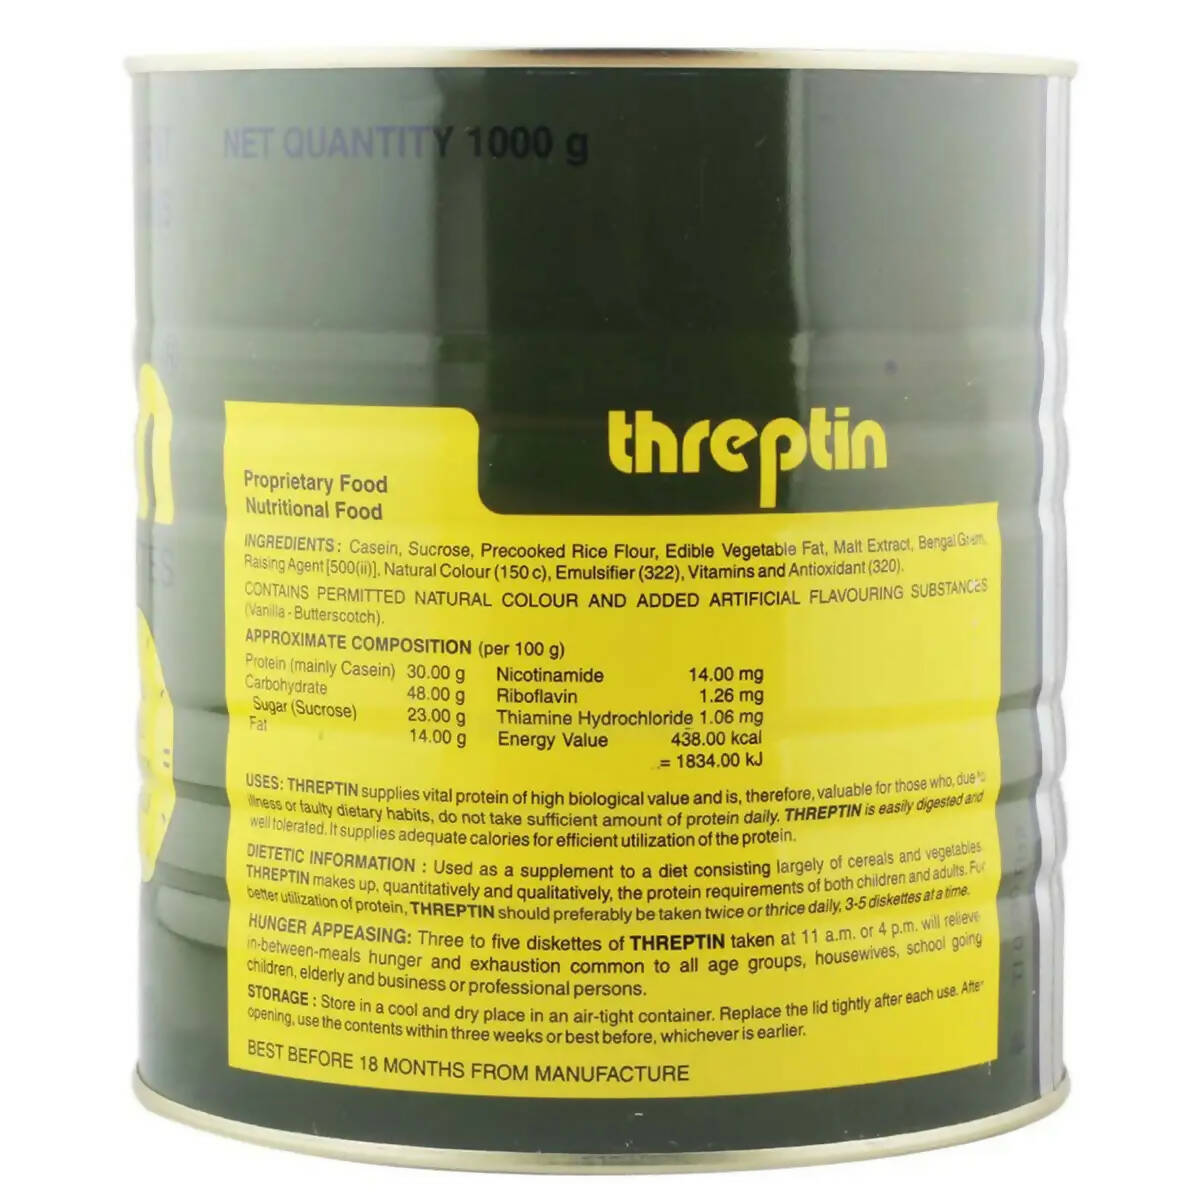 Threptin High-Calorie Protein Diskettes - Vanilla Flavor - Distacart